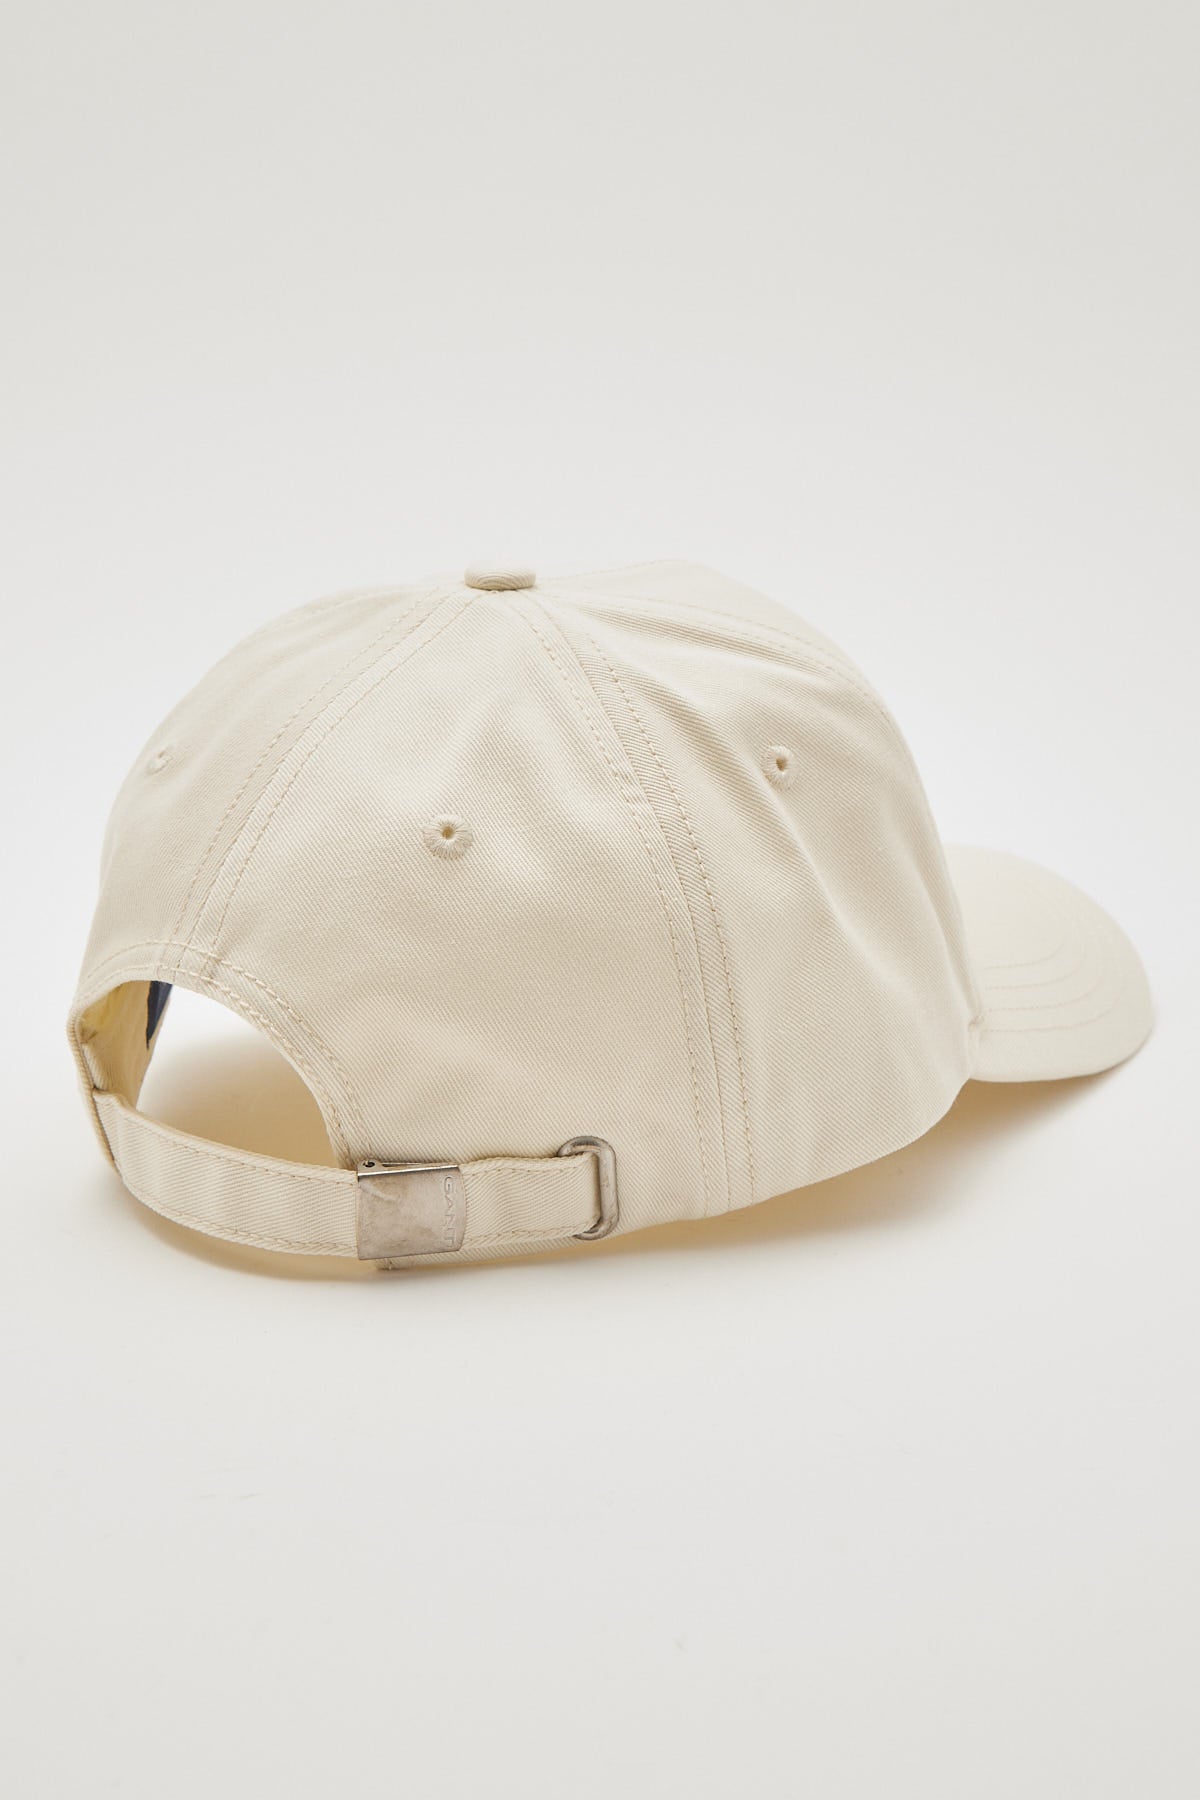 Gant Archive Shield Cotton Cap White